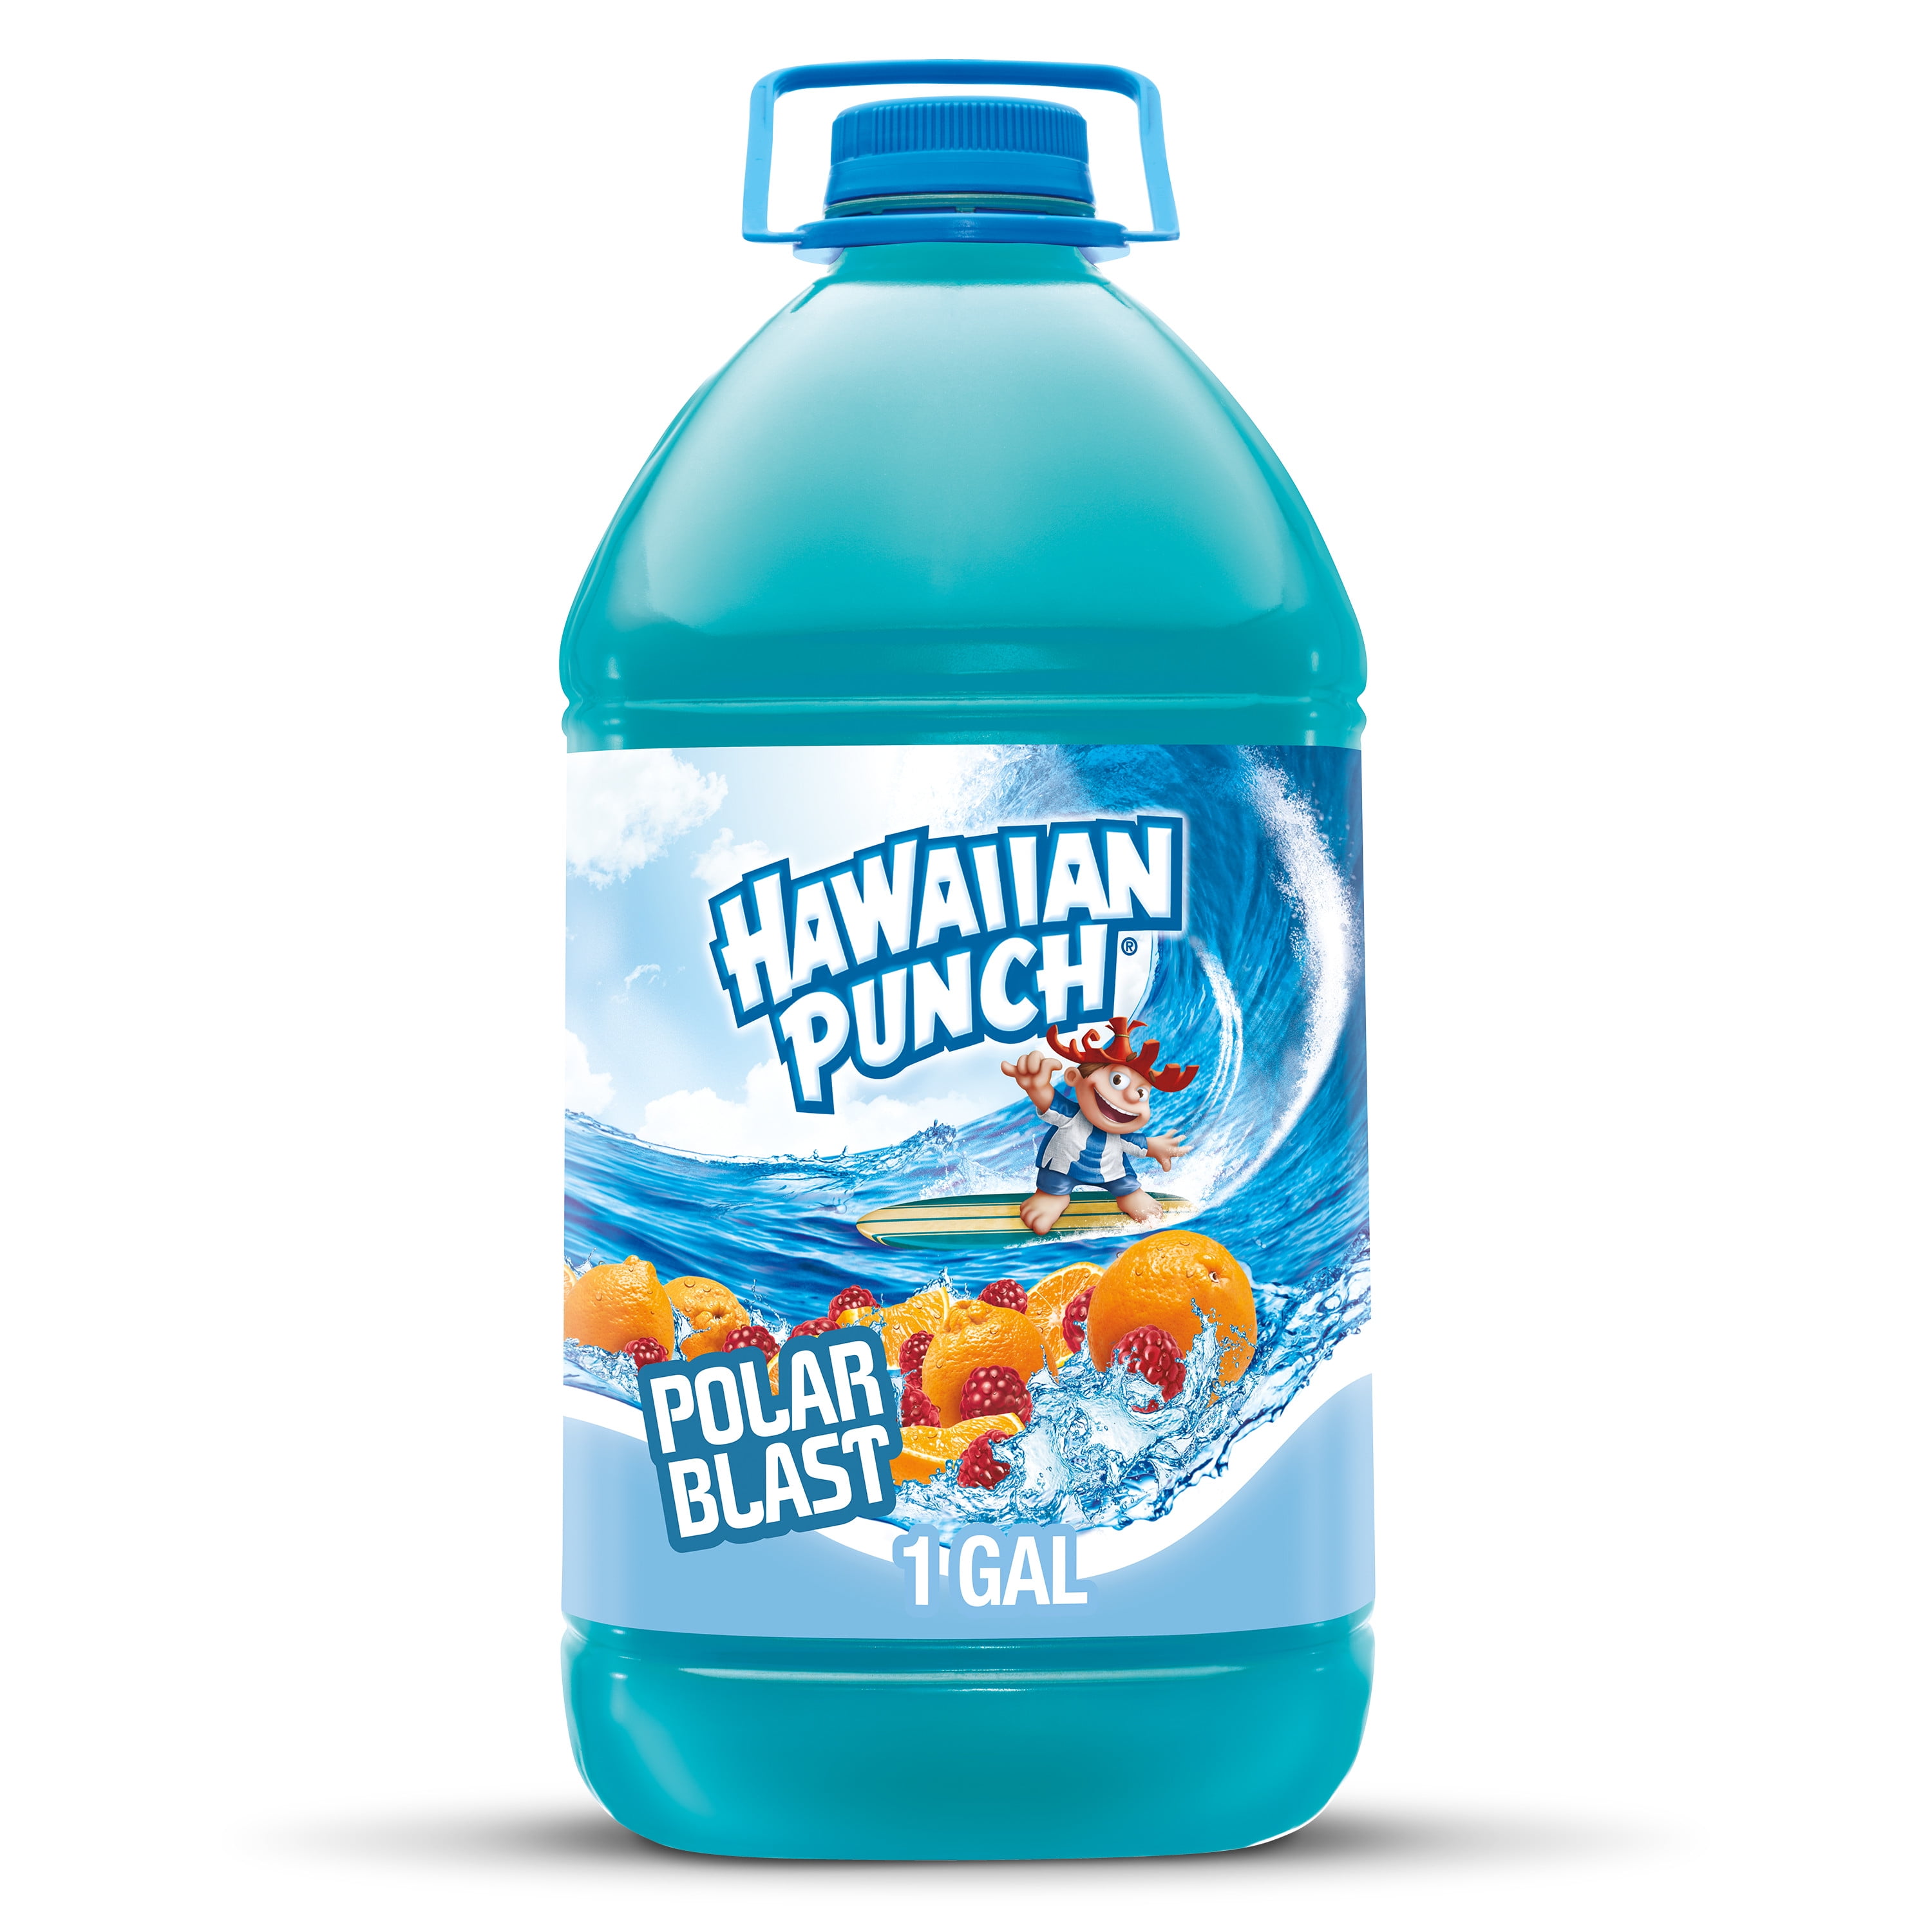 Hawaiian Punch Polar Blast, Juice Drink, 1 gal bottle 